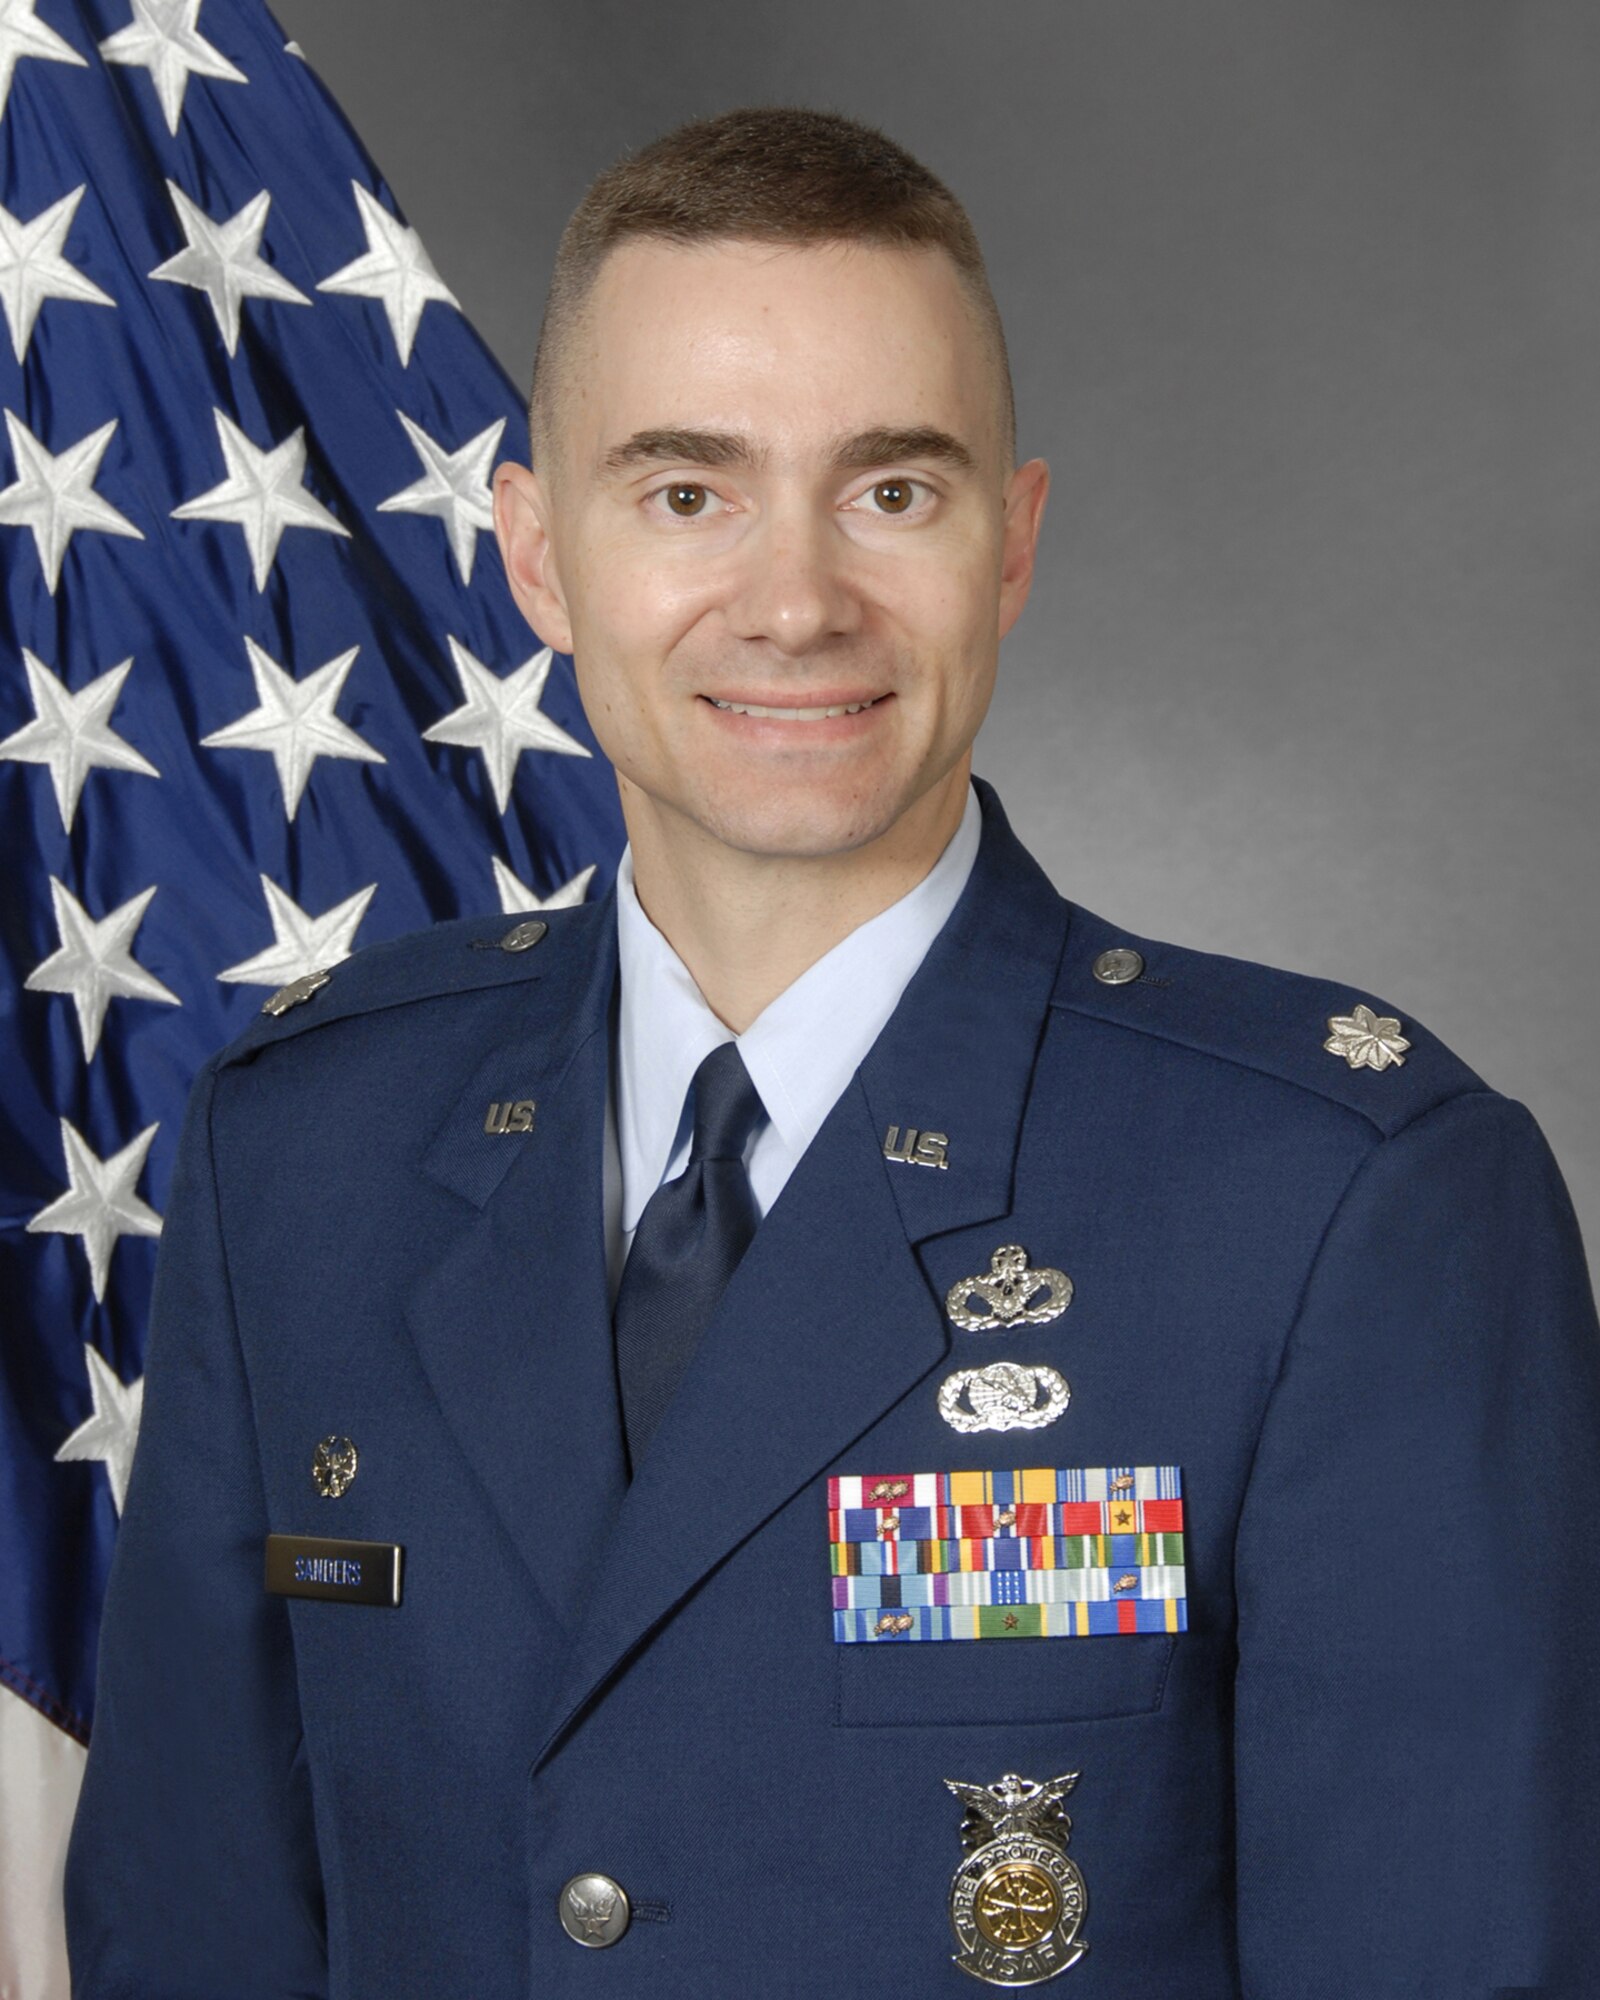 Lt. Col. Richard Sanders, 437th Civil Engineer Squadron commander